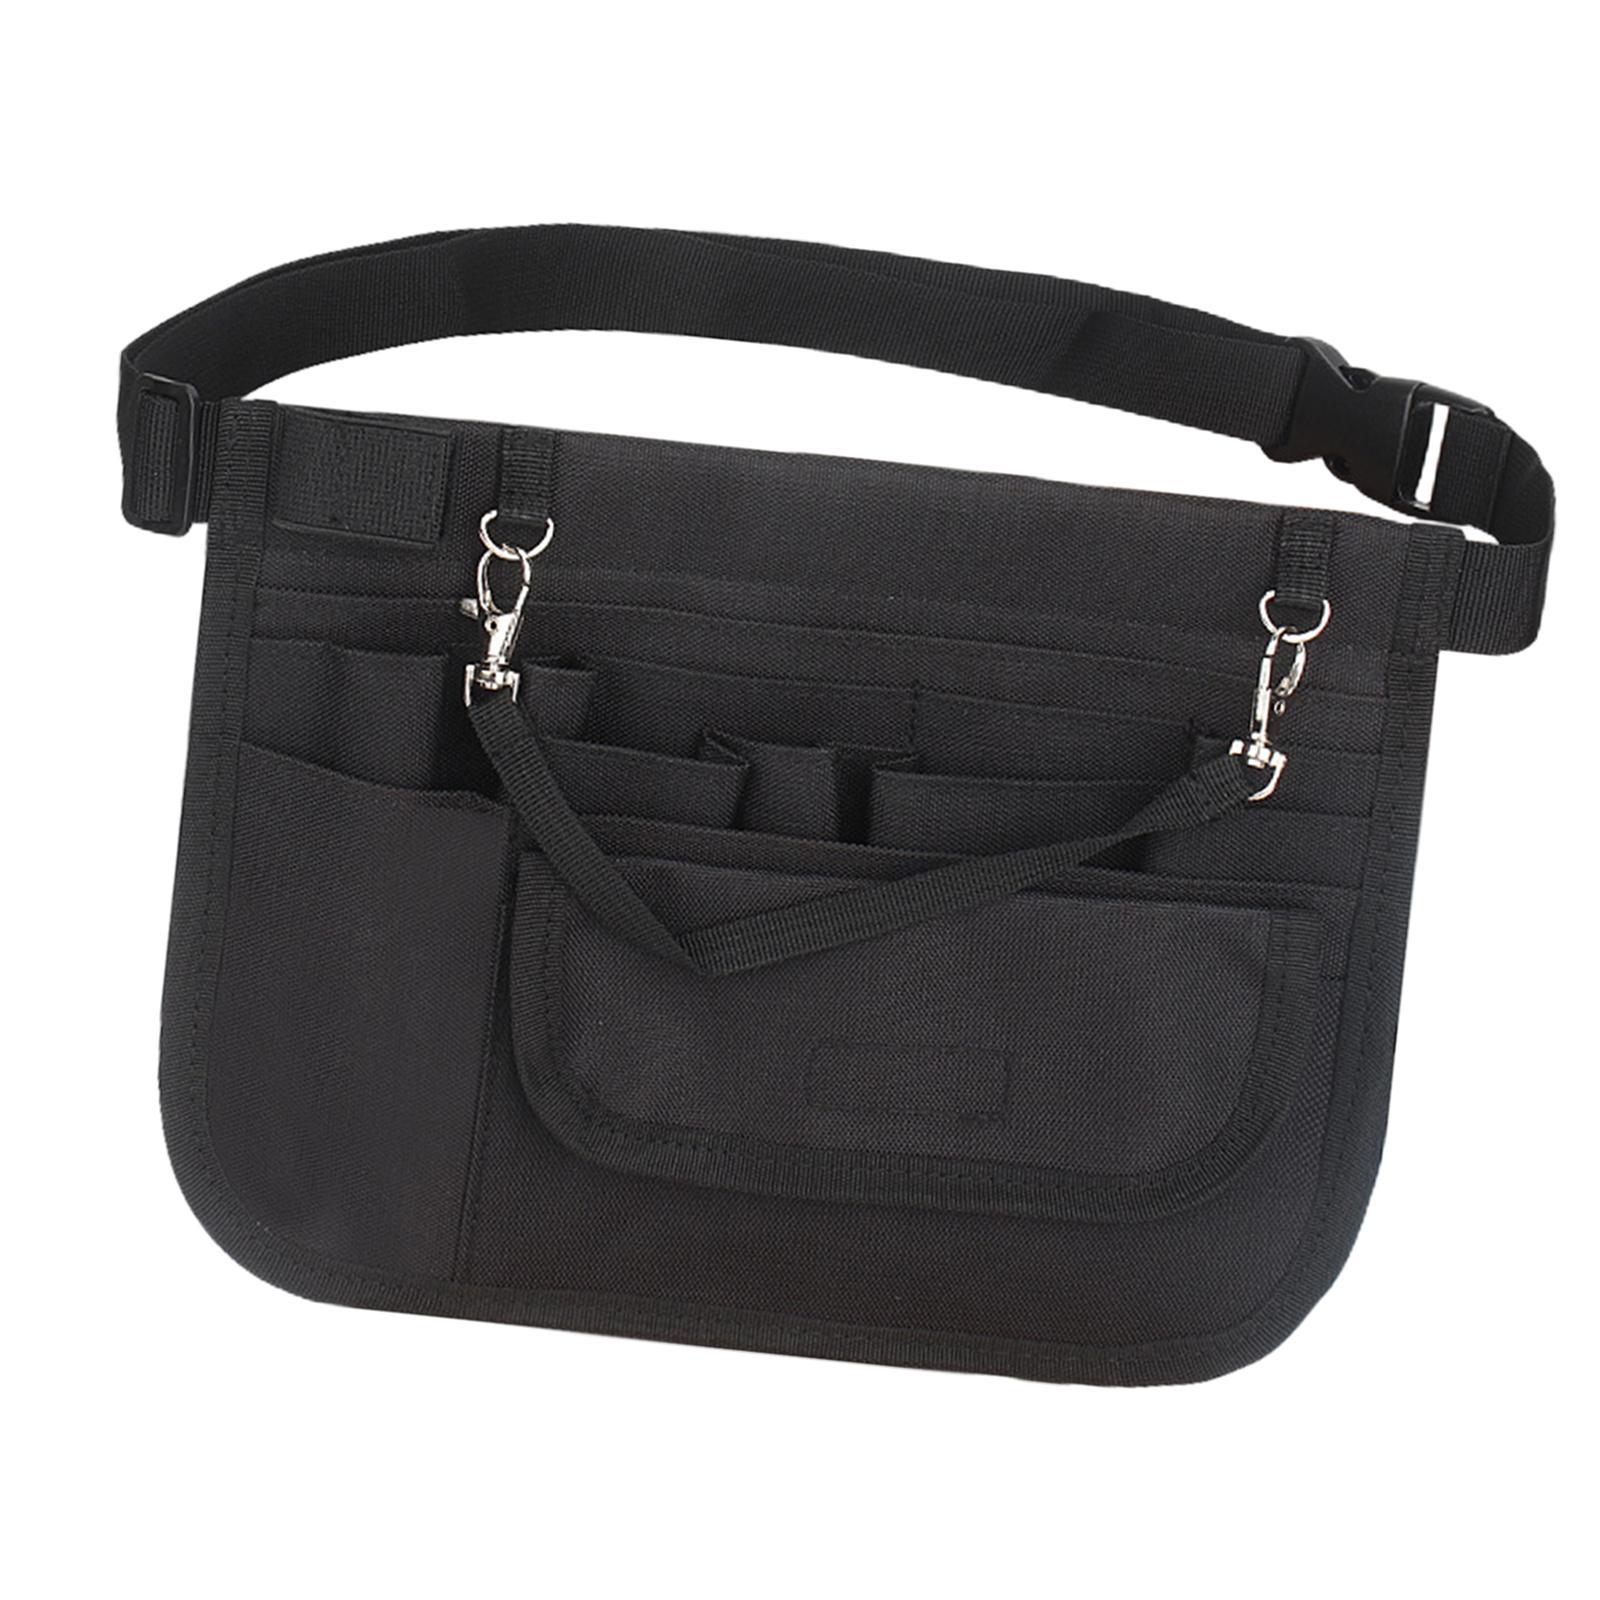 Nurse Waist Bag Adjustable Fanny Pack for Hospital Accessories Care  Tool